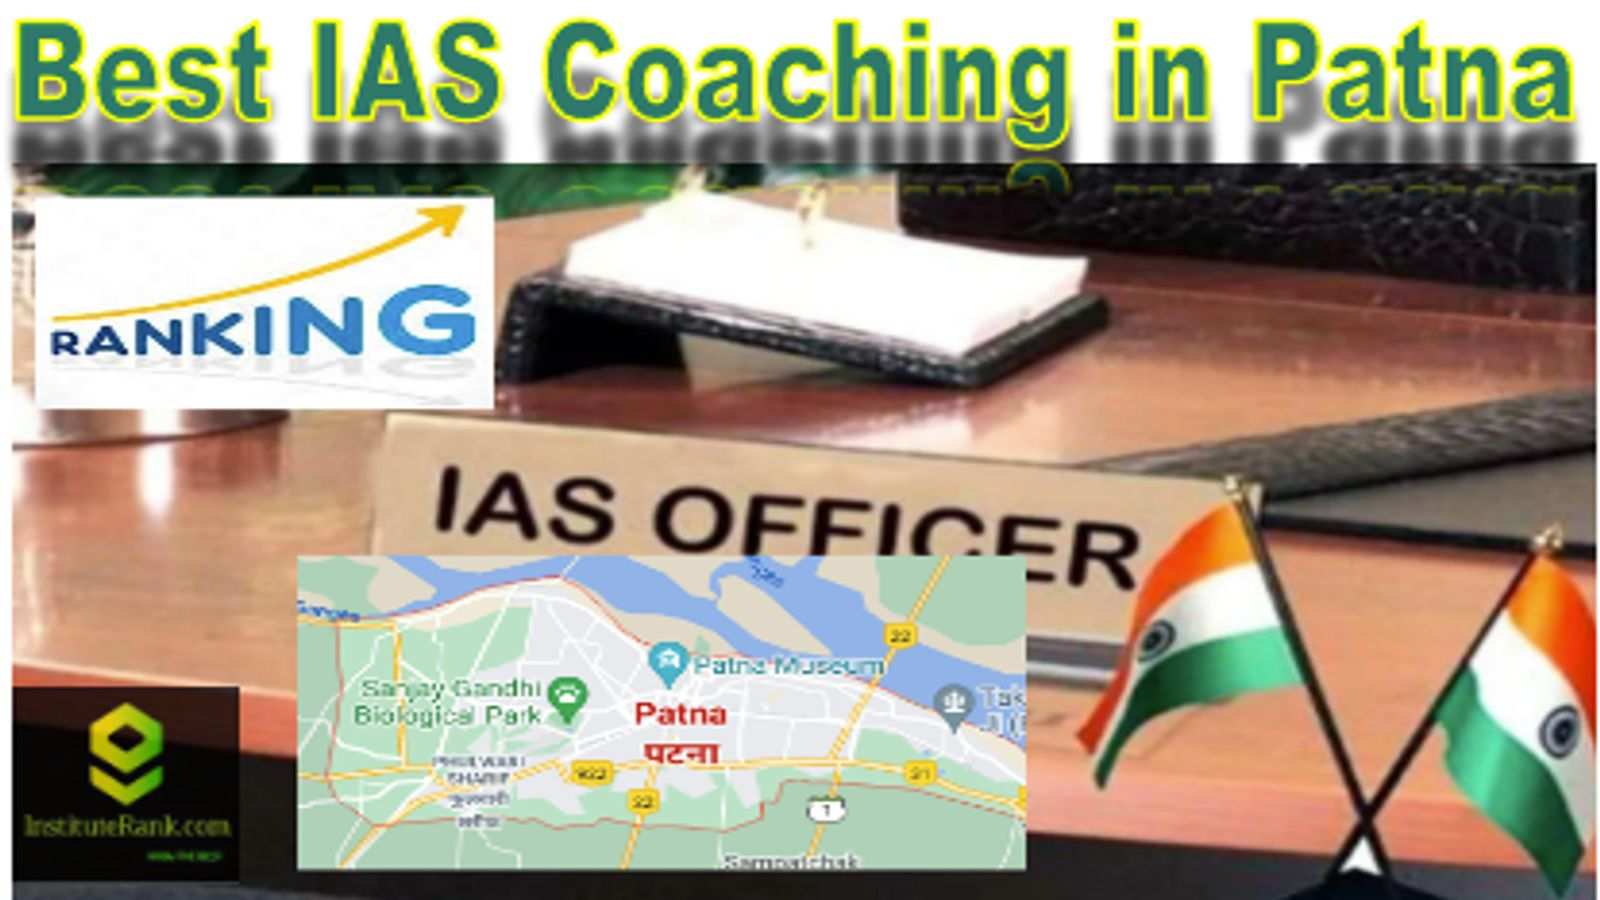 Best IAS Coaching in Patna Ranking 2022